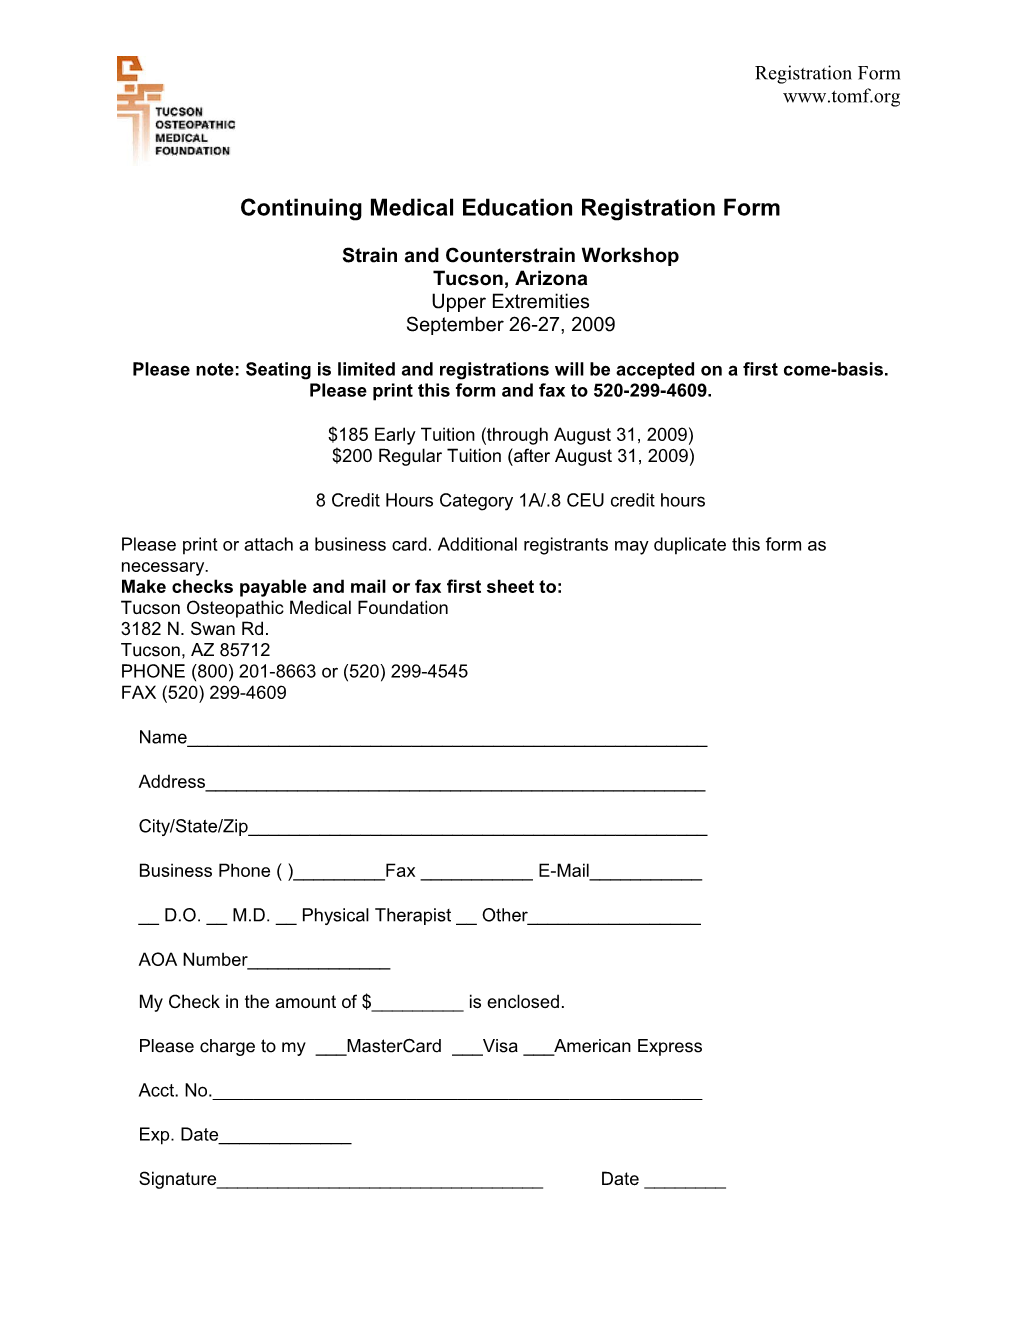 Continuing Medical Education Registration Form